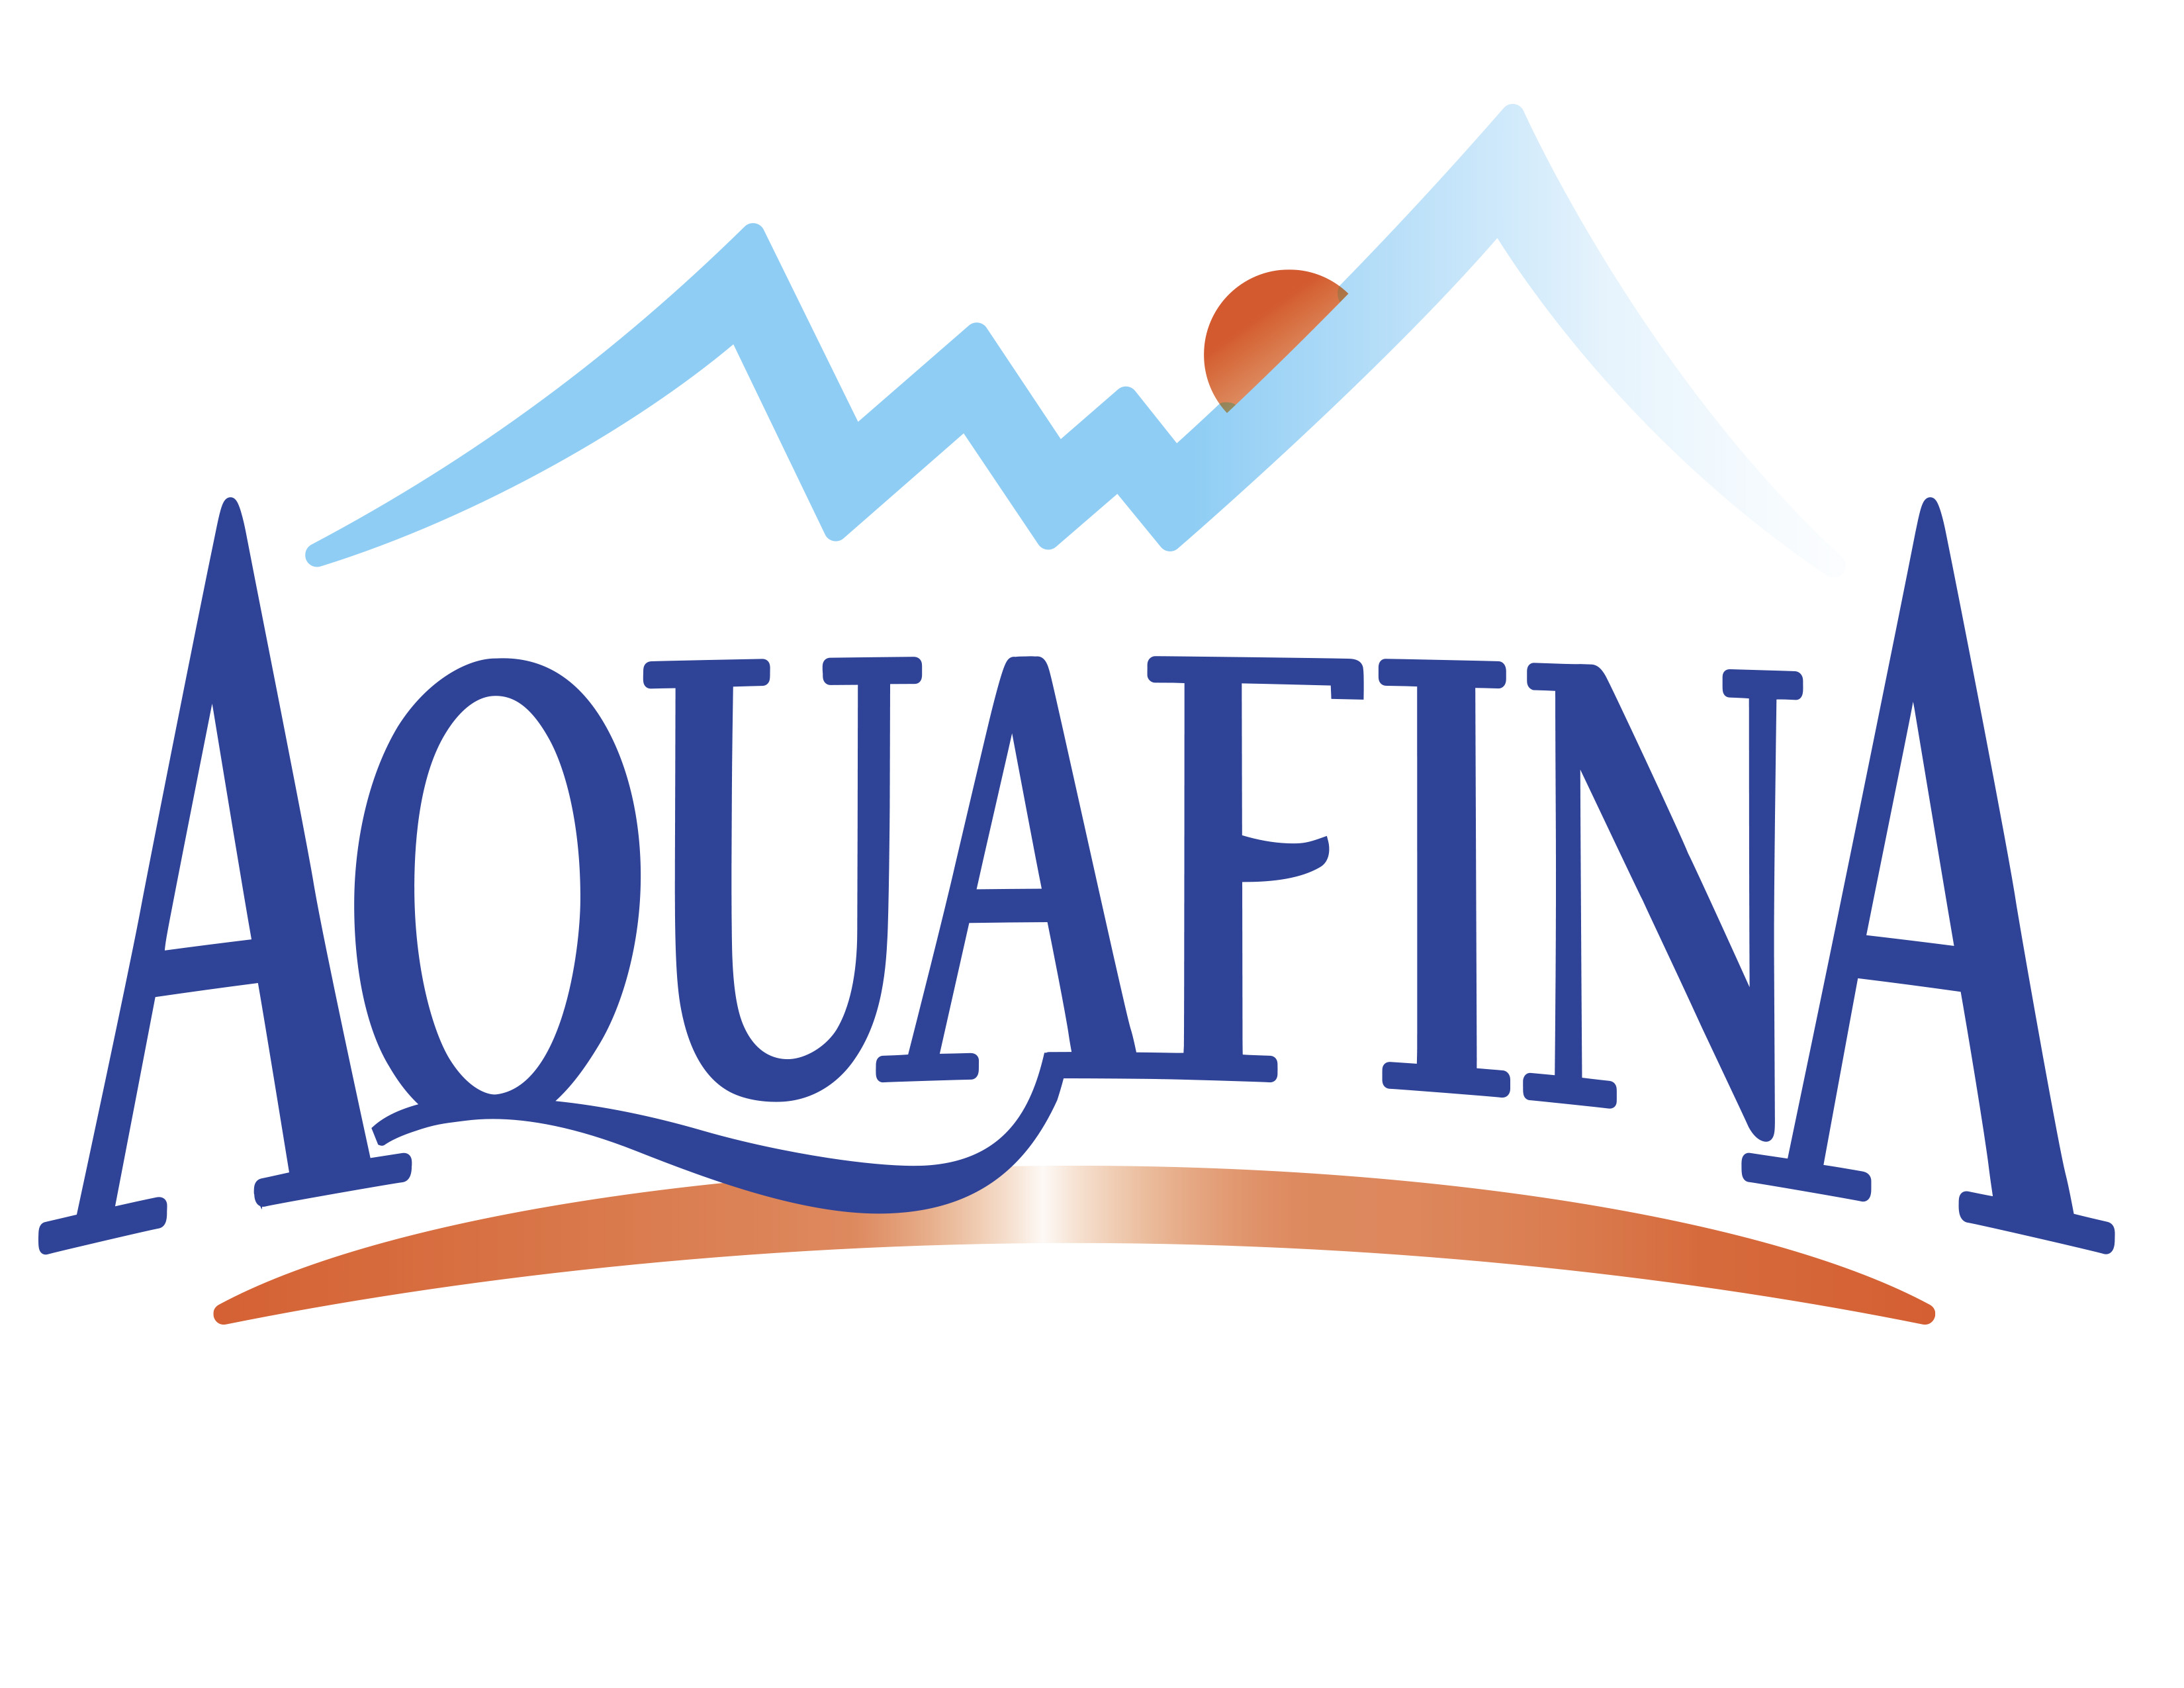 Logo of Aquafina